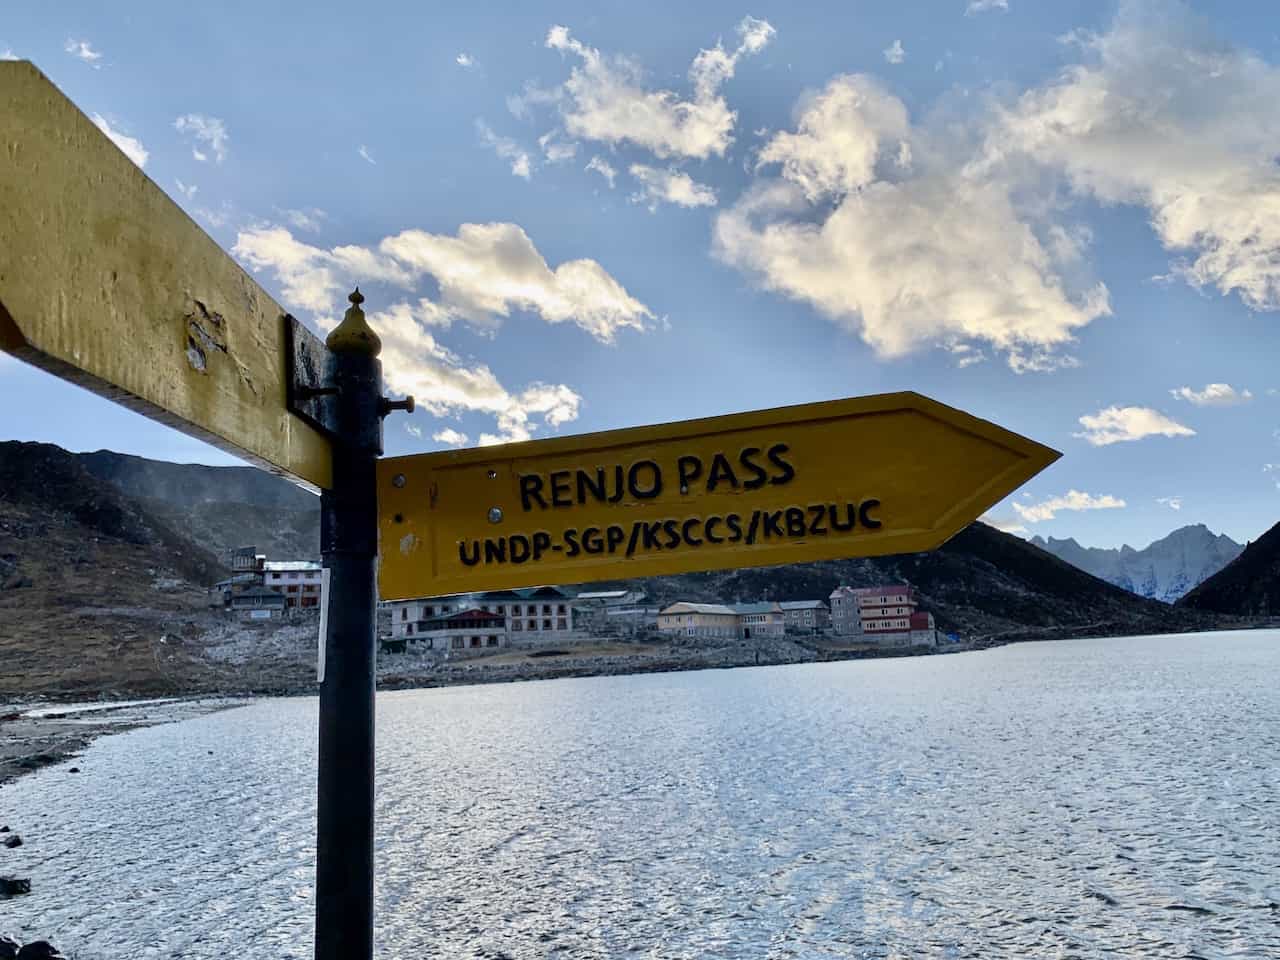 Renjo La Pass Directions